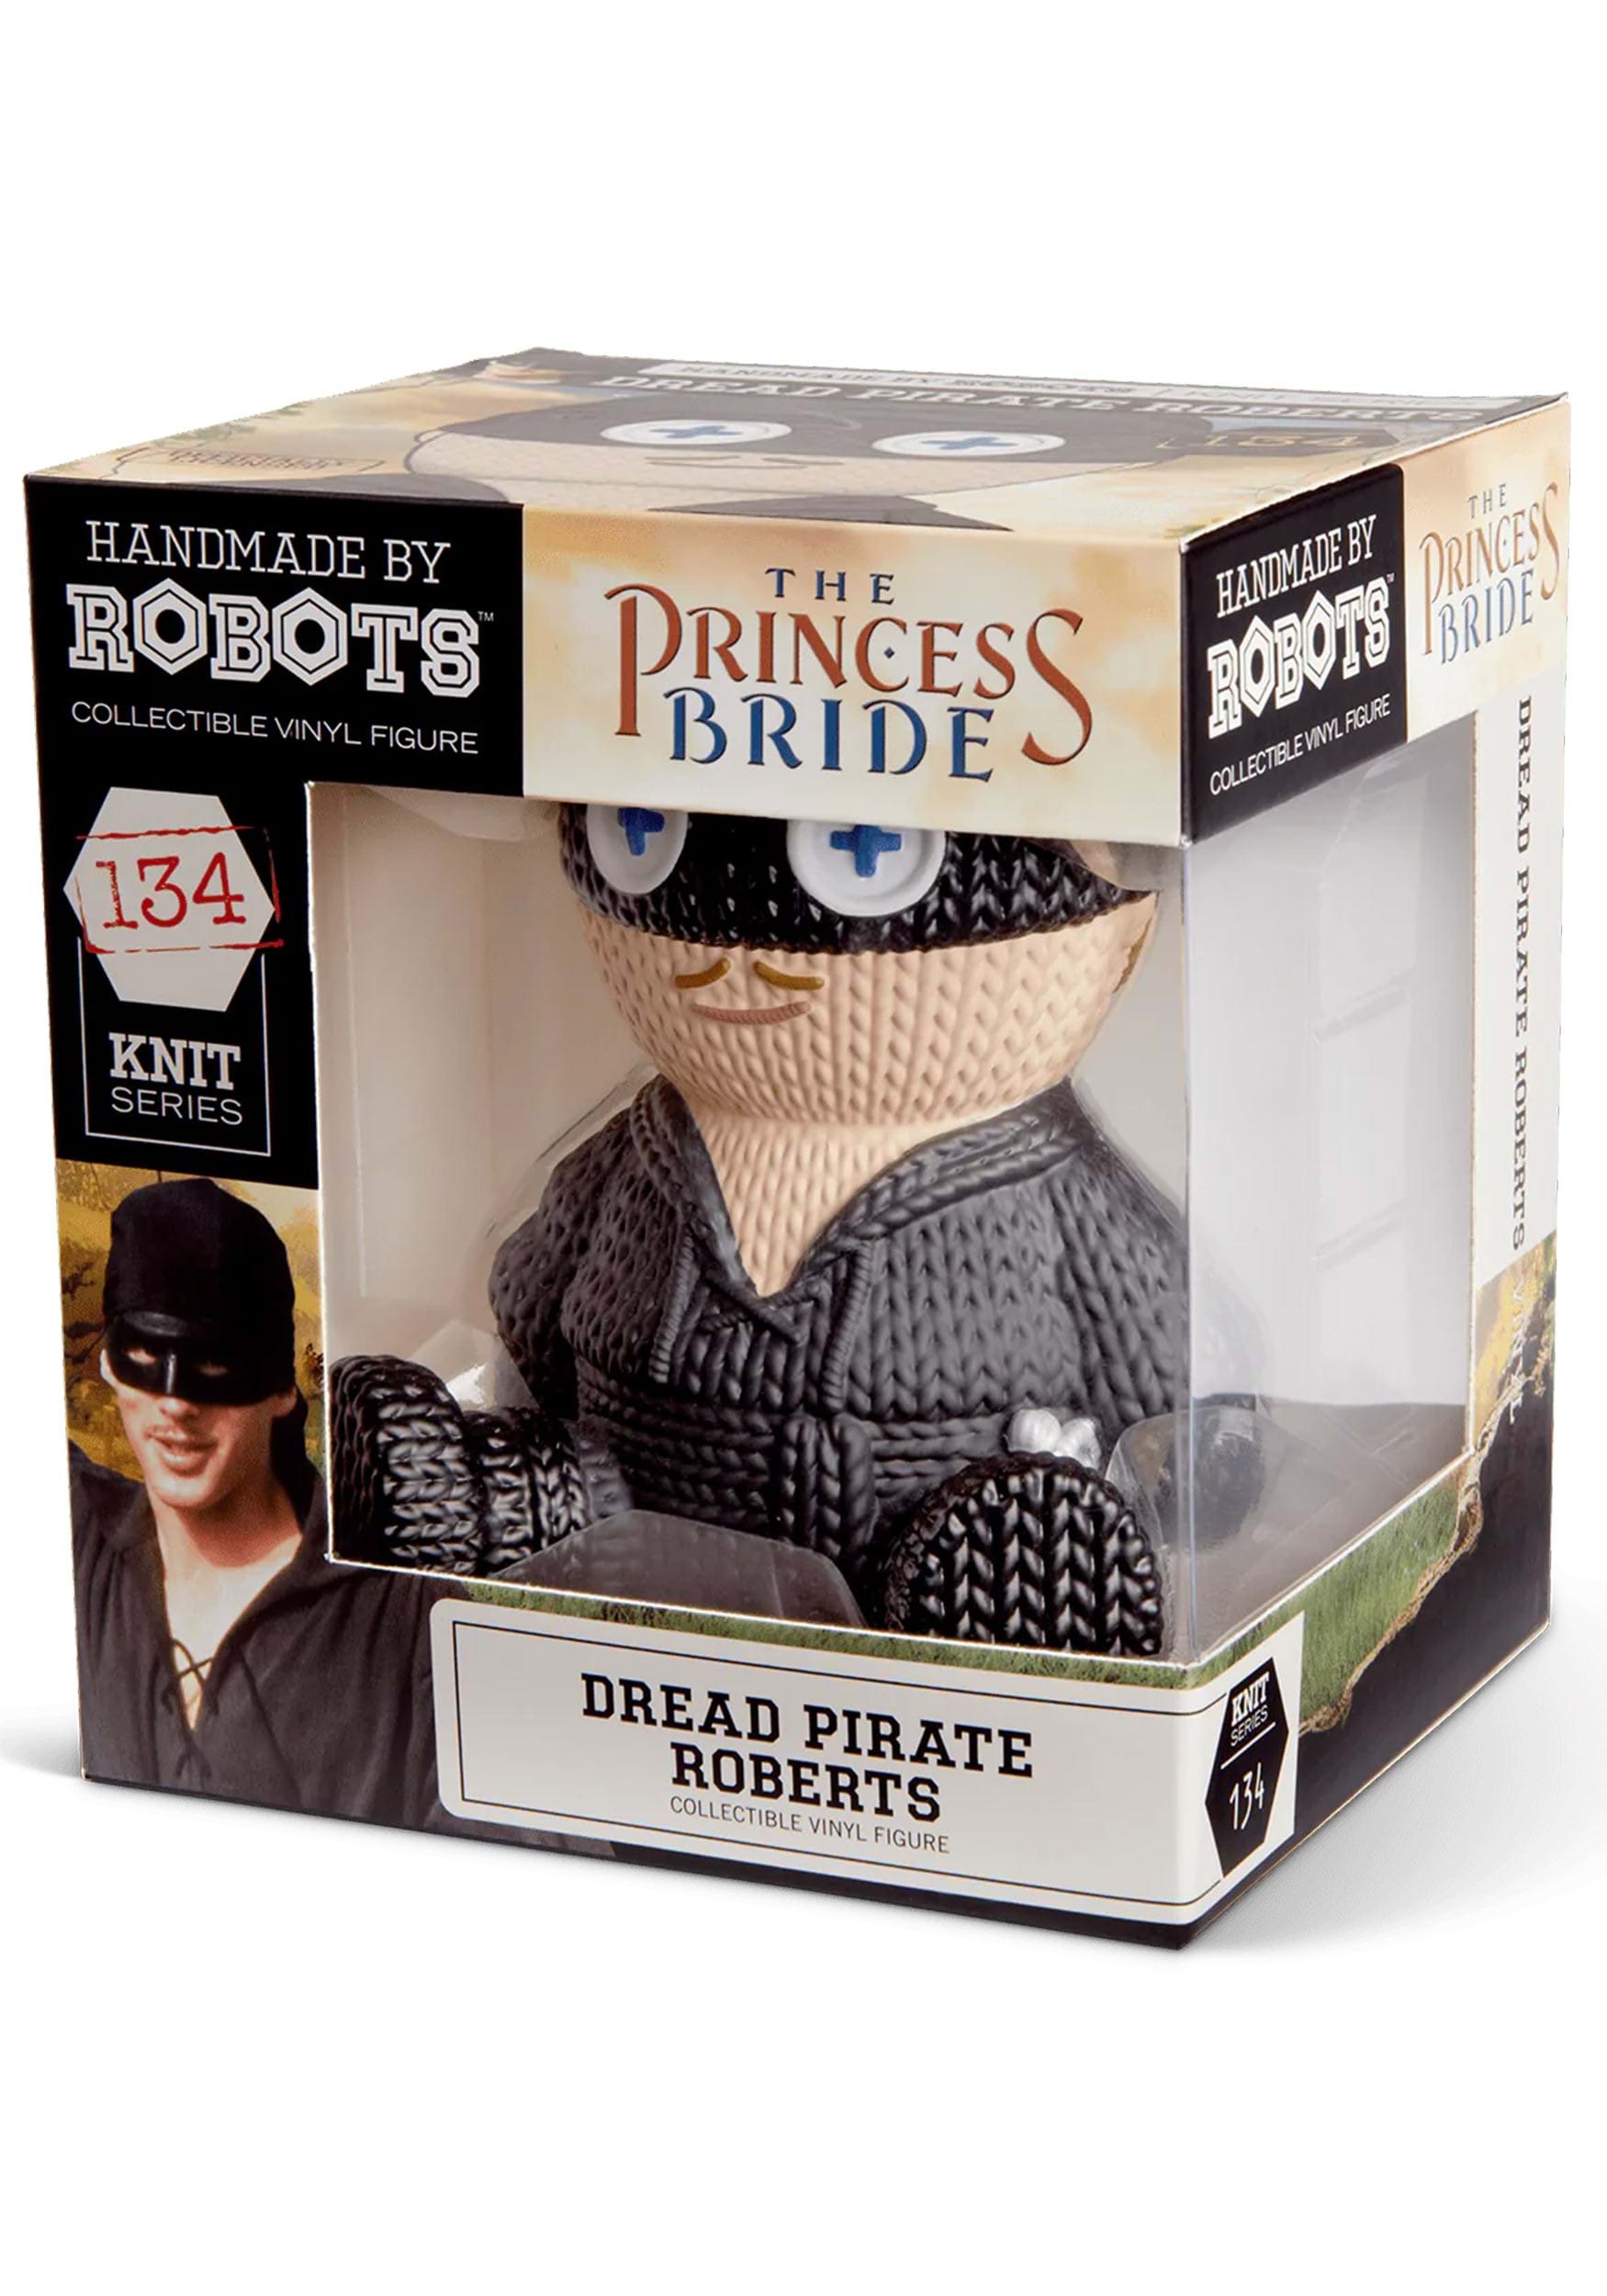 Handmade By Robots The Princess Bride Dread Pirate Roberts Vinyl Figure